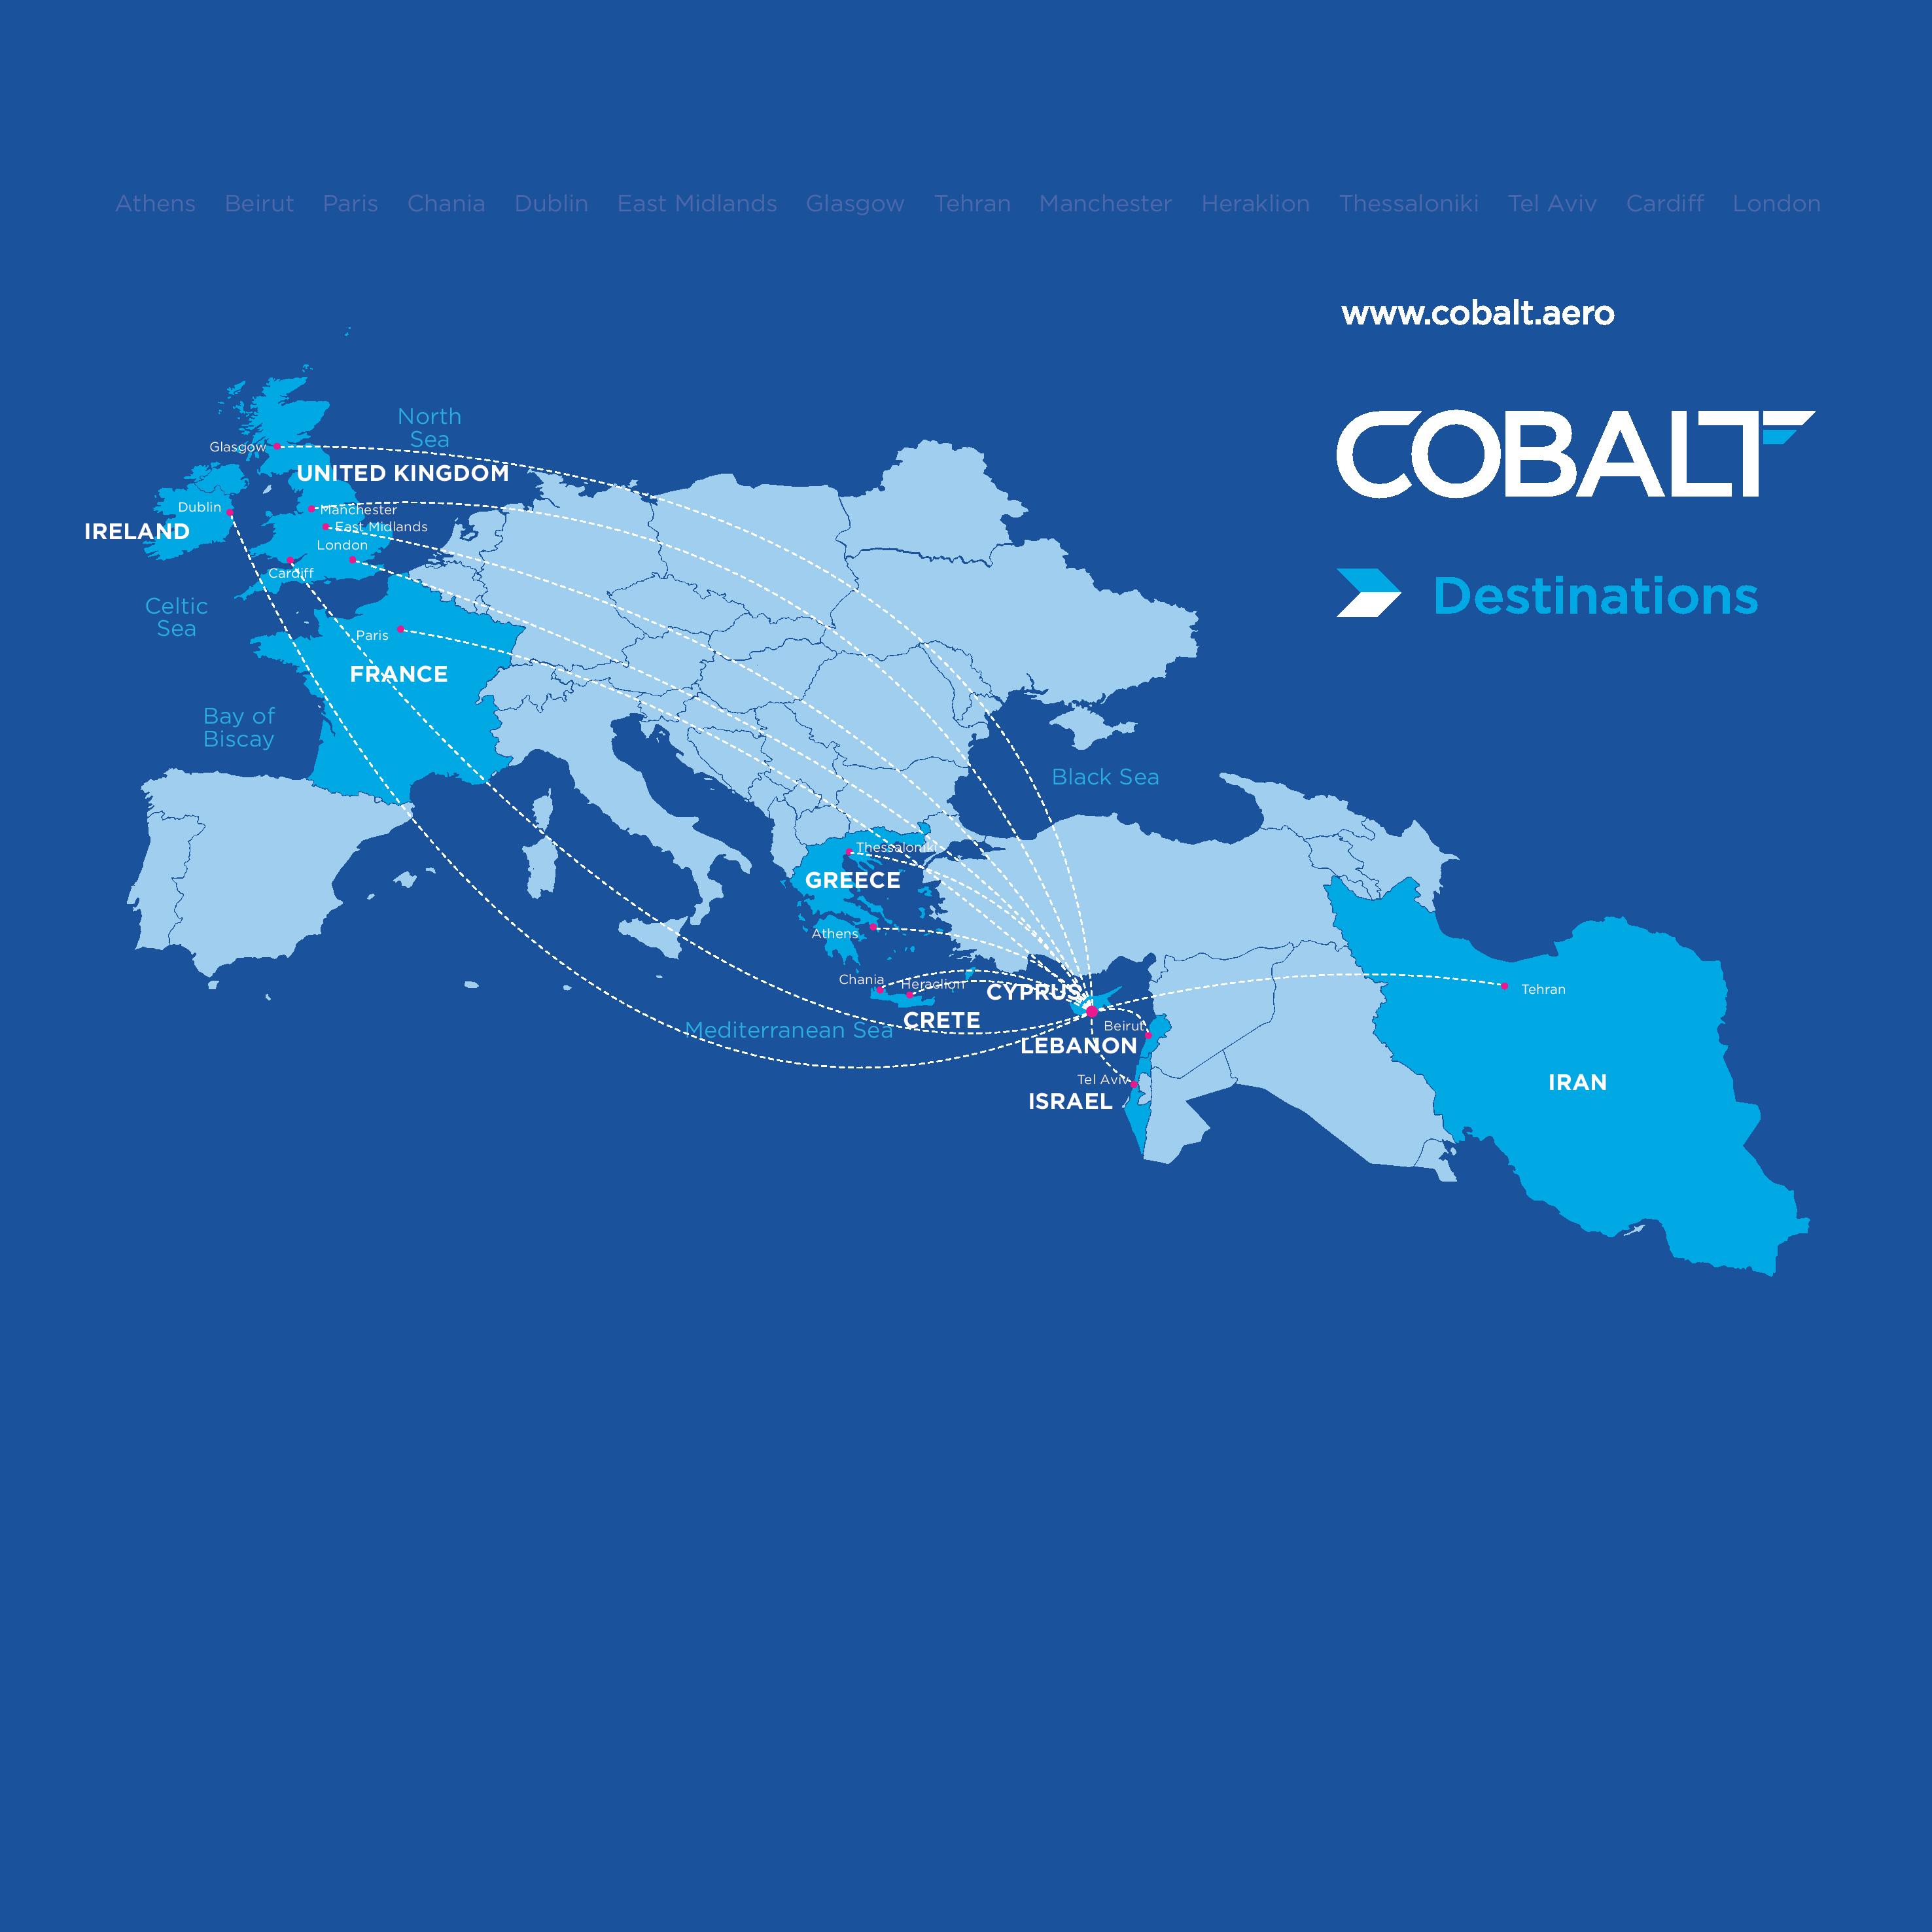 Picture of Cobalt's proposed destinations.